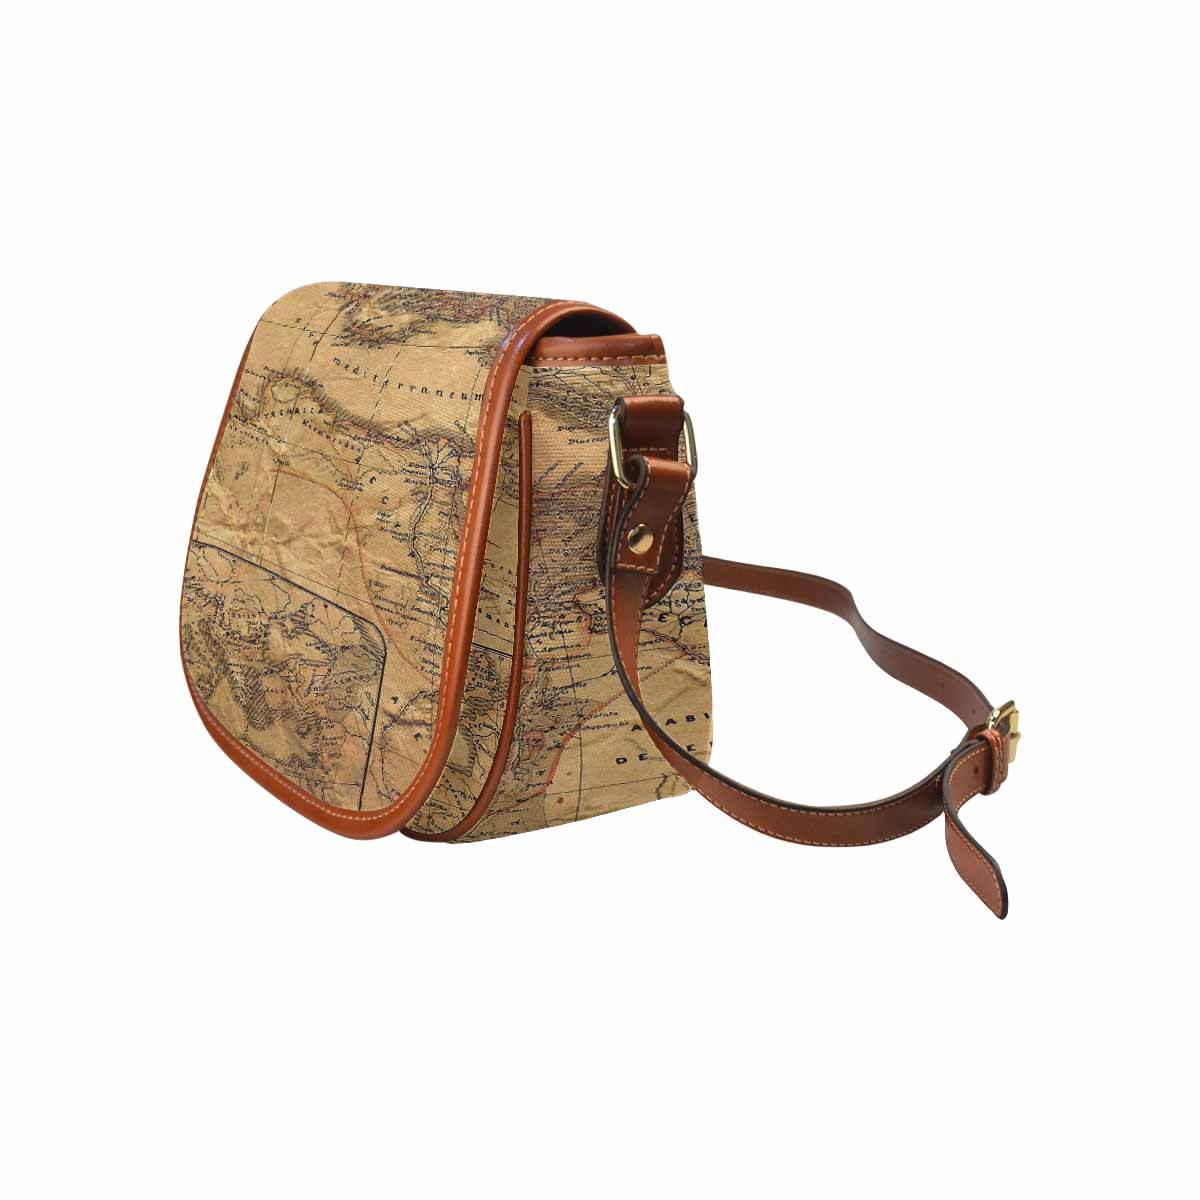 Antique Map design Handbag, saddle bag, Design 21